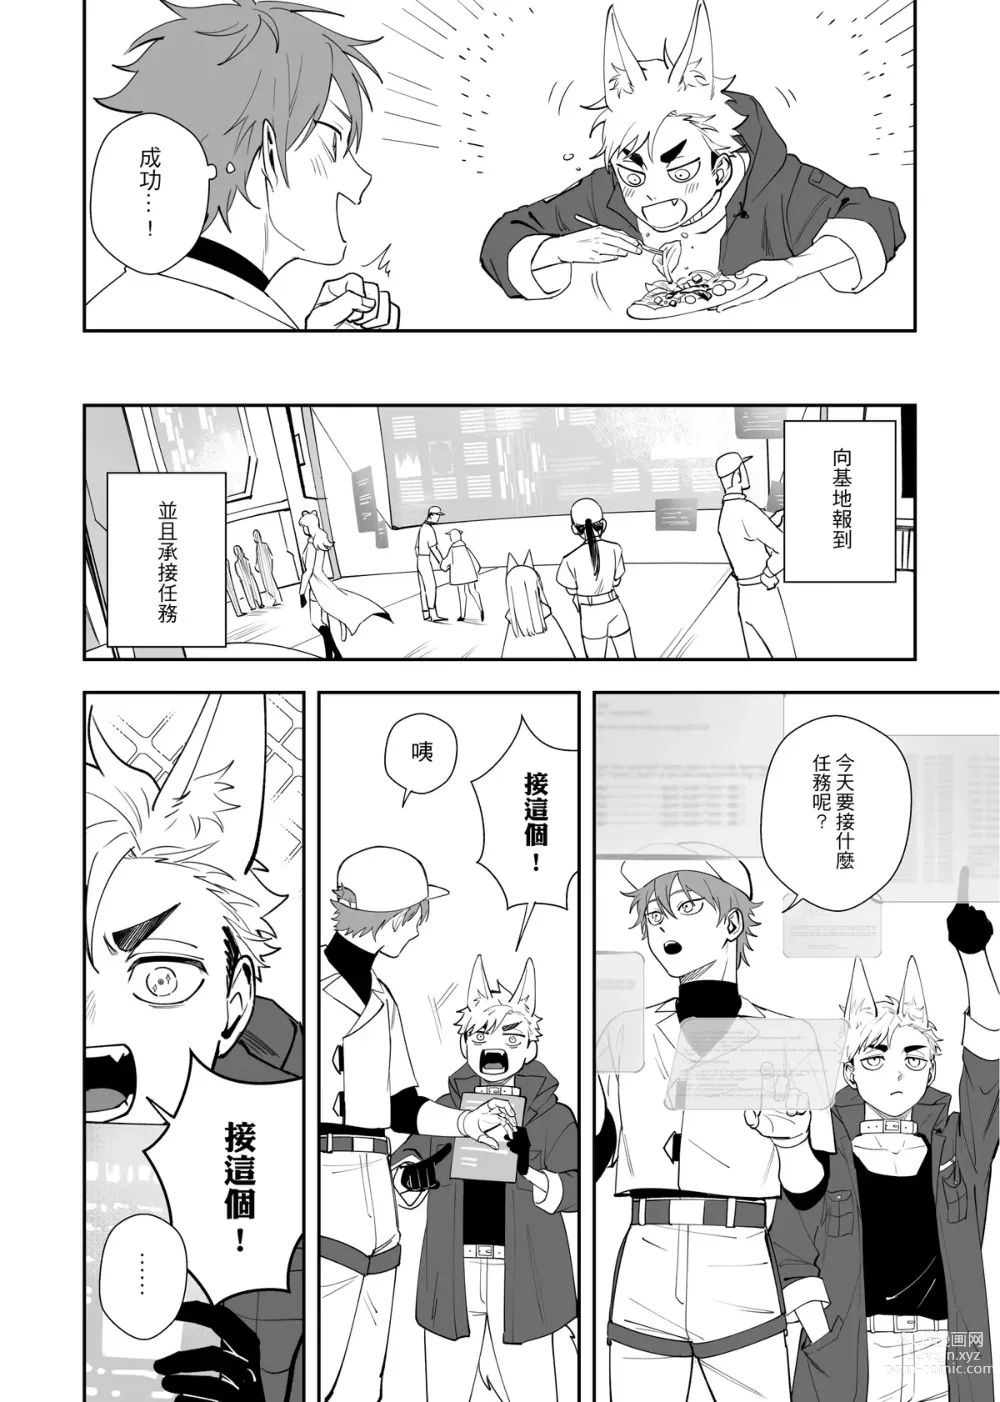 Page 7 of doujinshi 這是一個飼育員日常